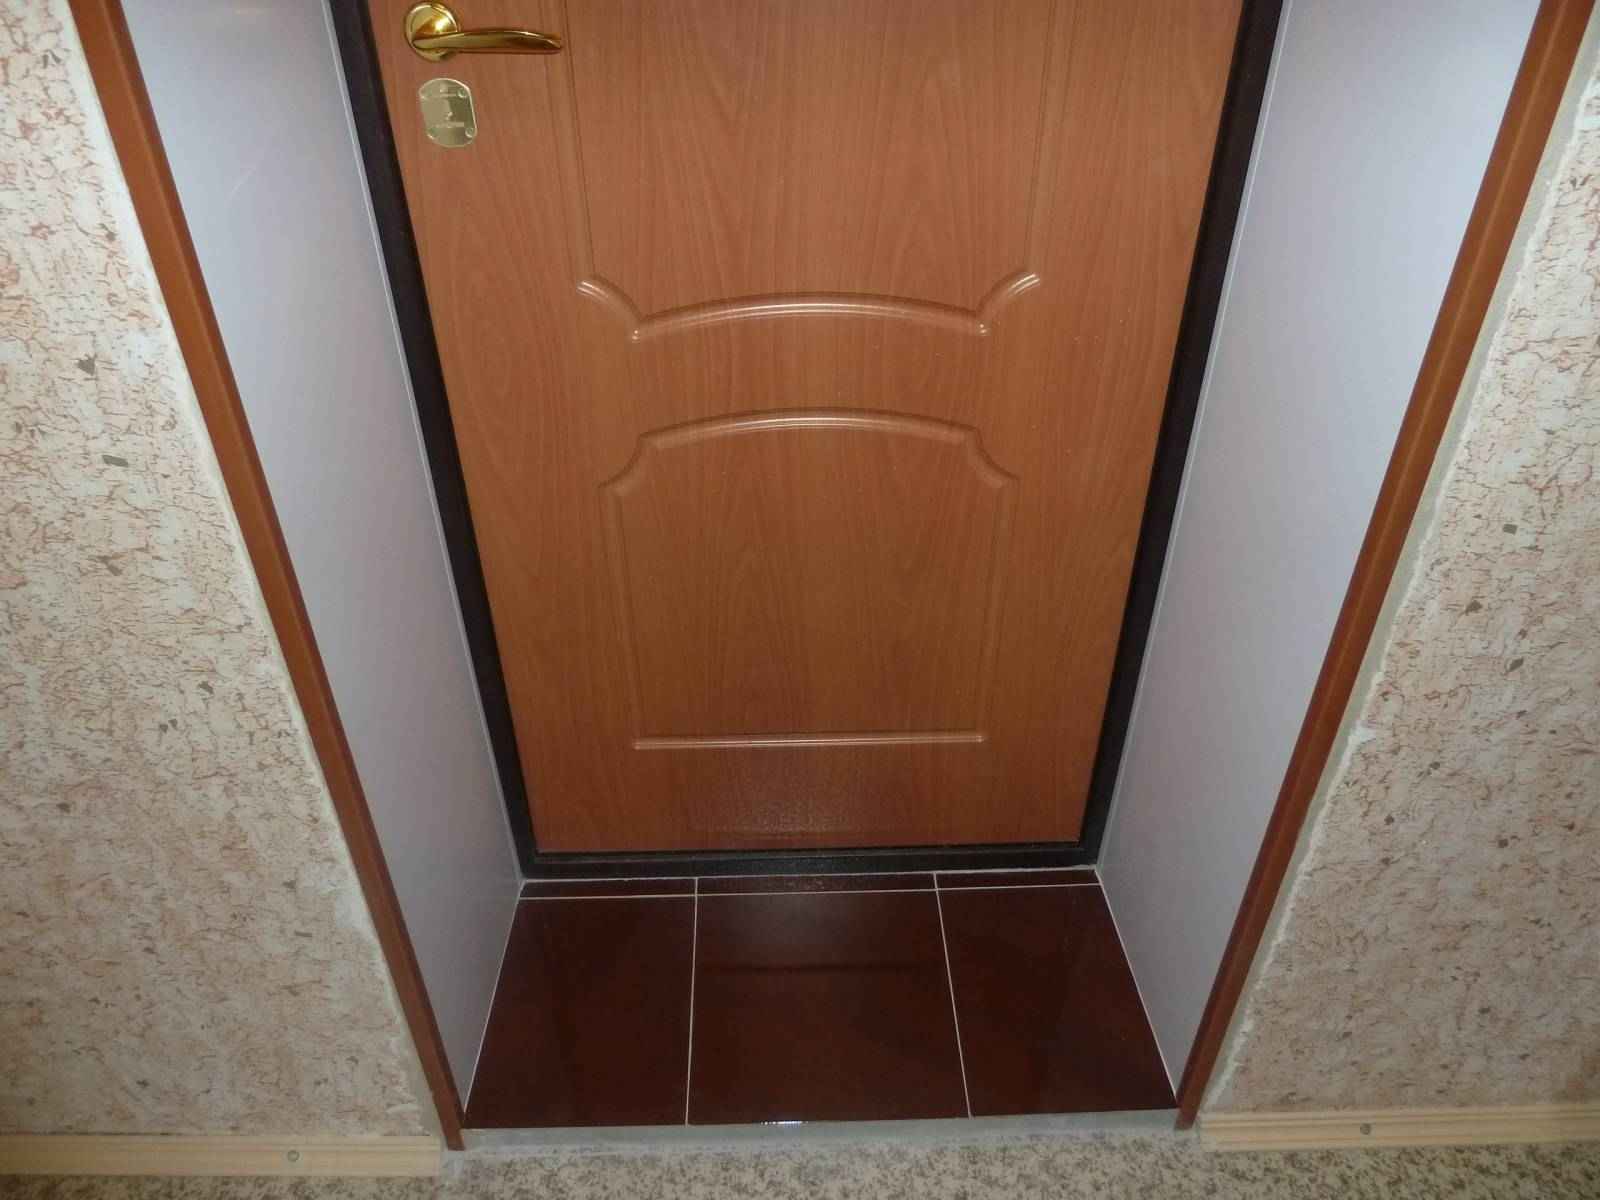 Фото входной двери с откосами внутри квартиры